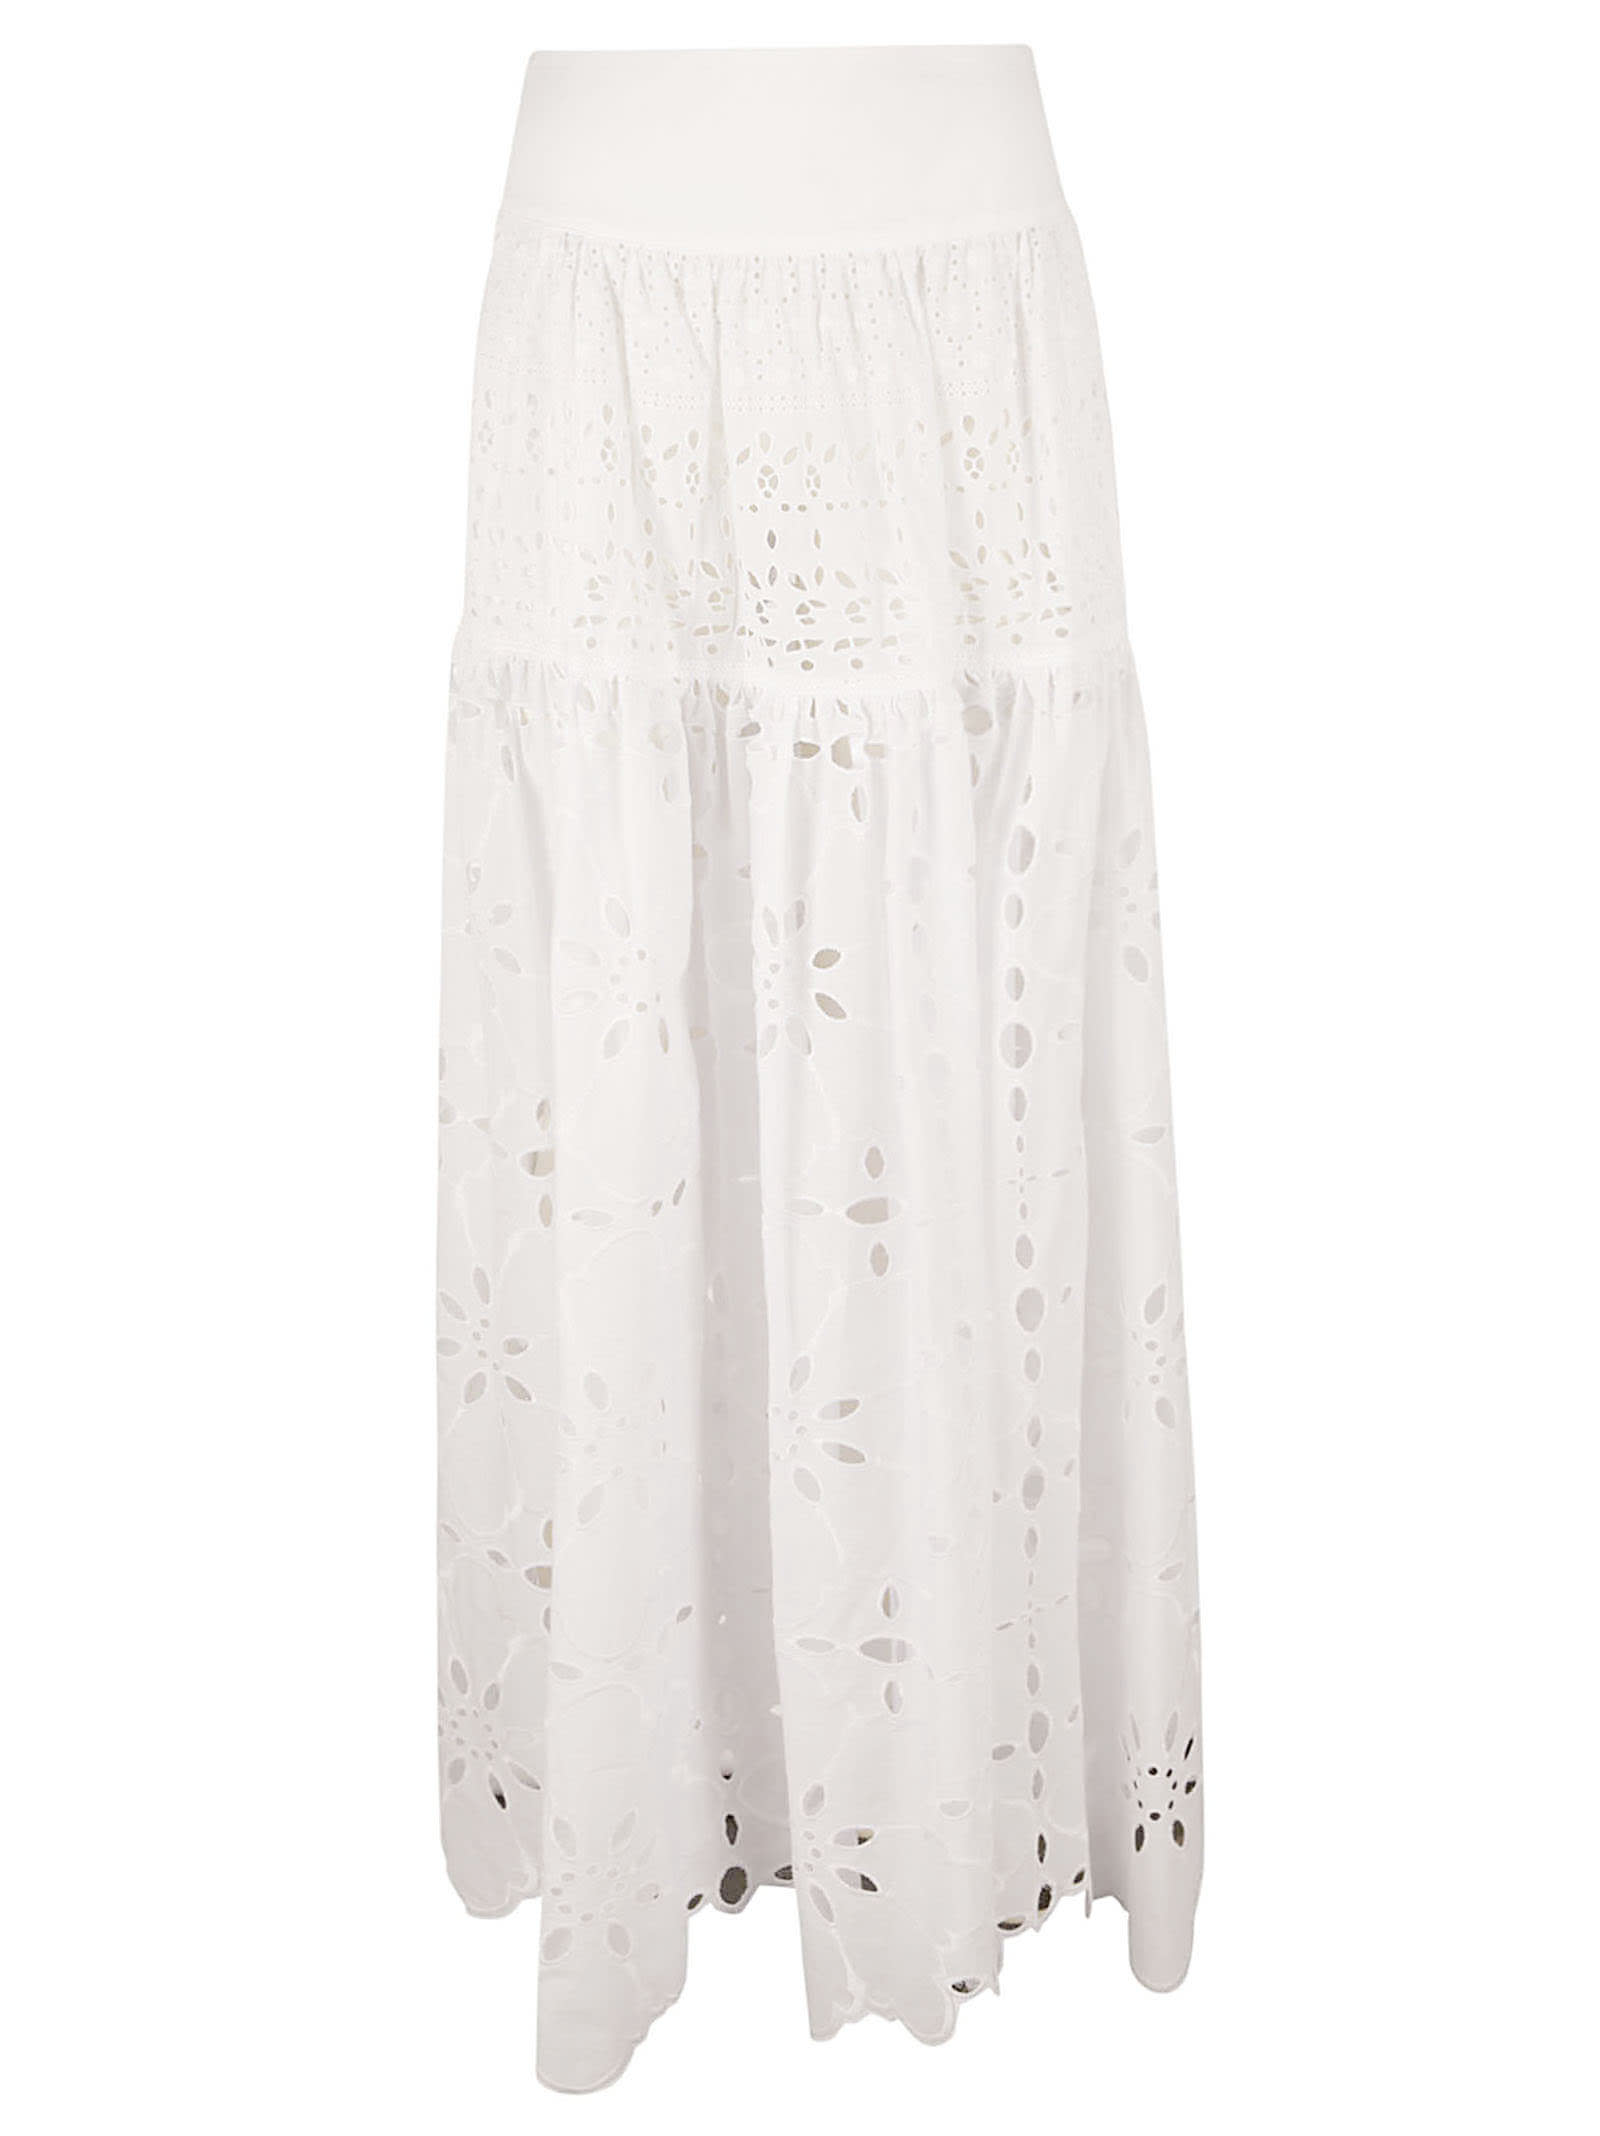 High-waist Floral Perforated Skirt